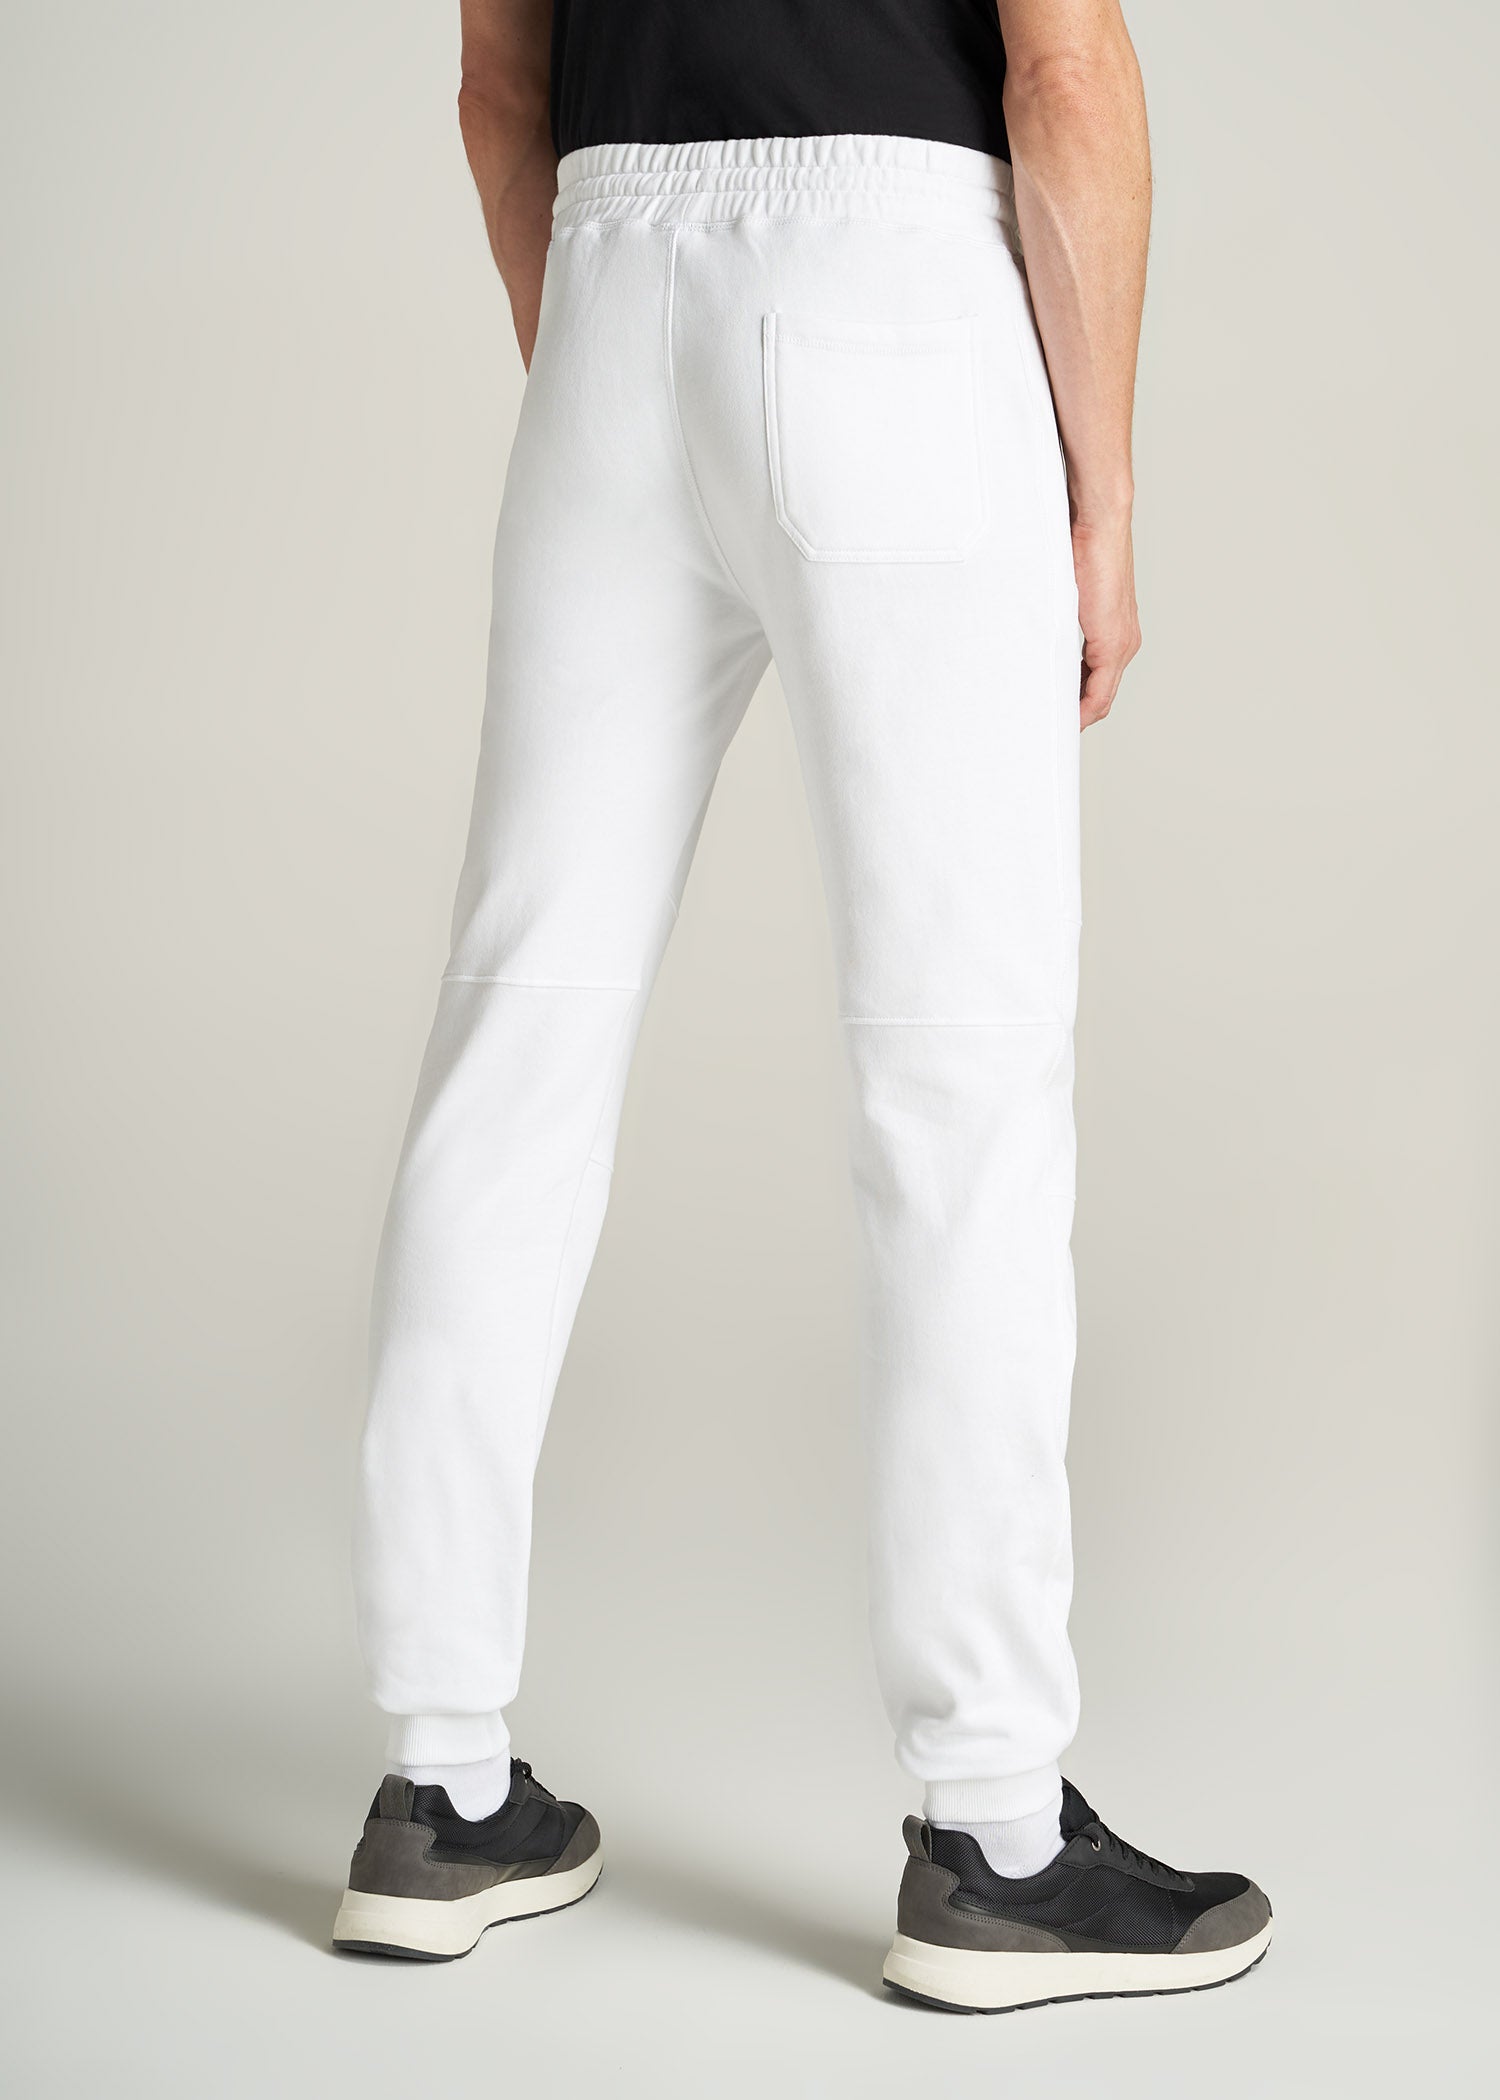 HLK8806 Brand Sweatpants Men Pure Cotton Casual Sports Trousers Tracksuit  Bottoms Mens Jogger Track Pants _ - AliExpress Mobile